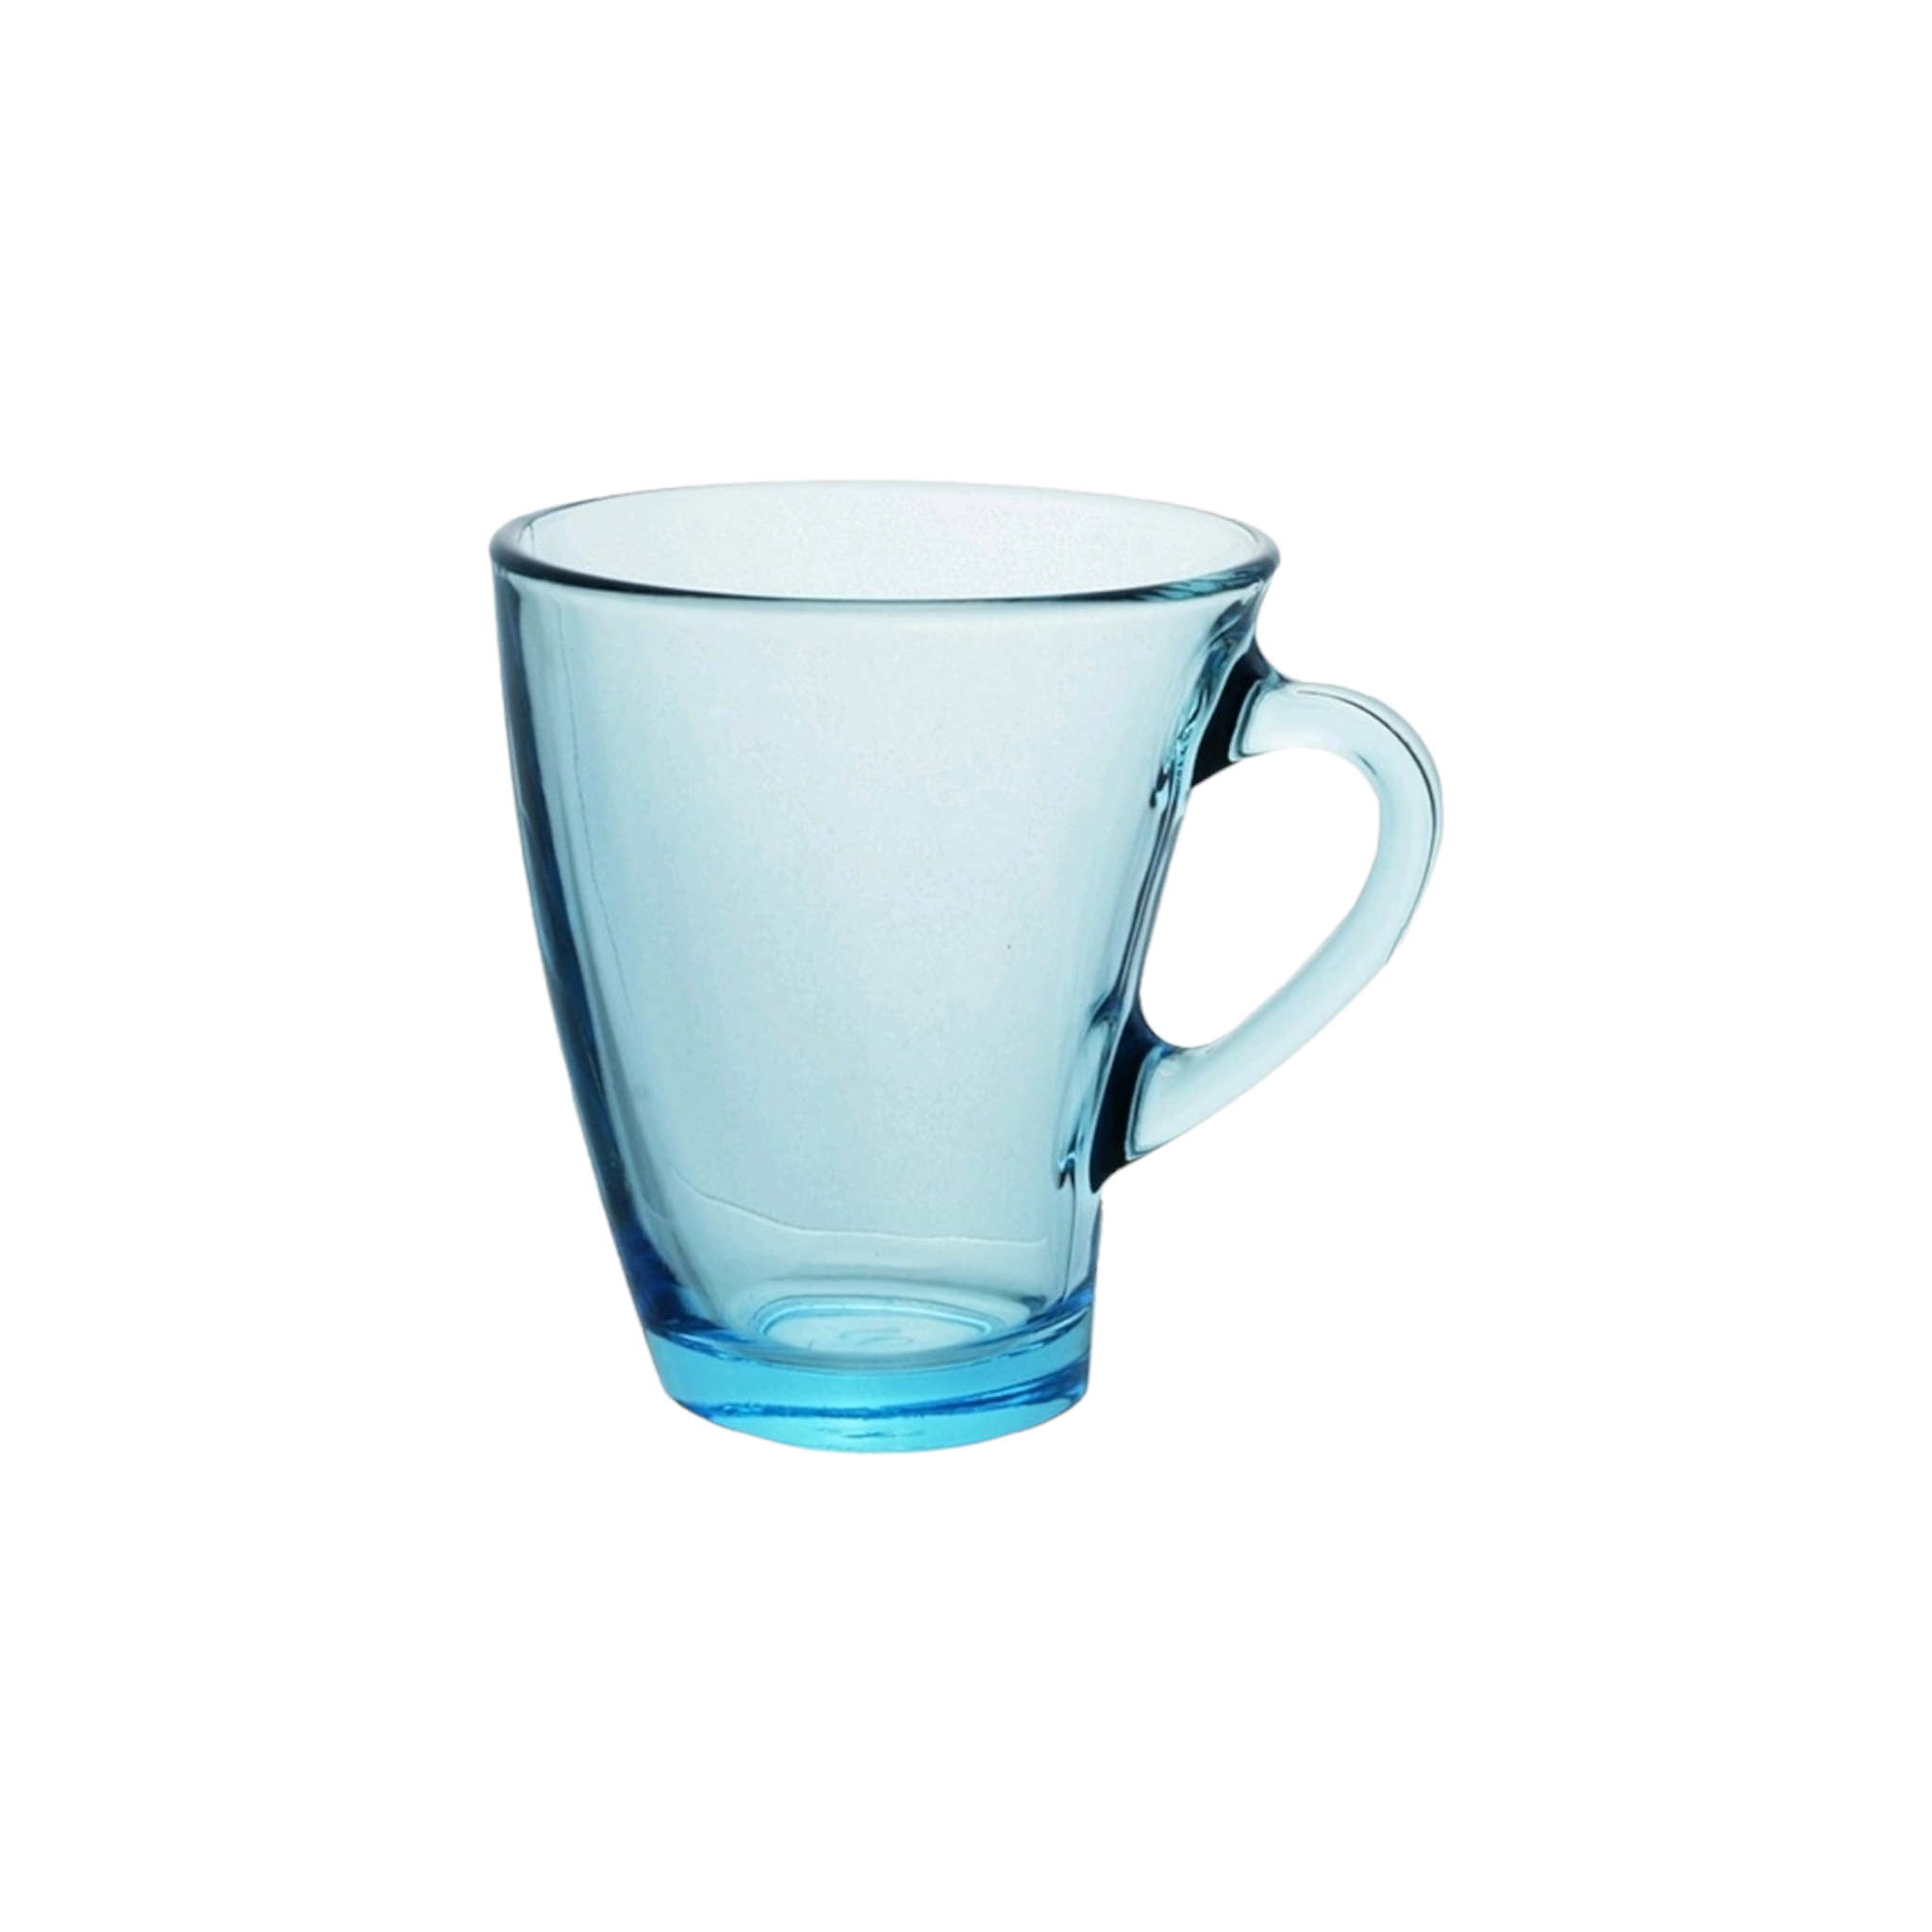 Pasabahce Penguen Glass Coffee Mug 170ml Turquiose 6Pack 24070